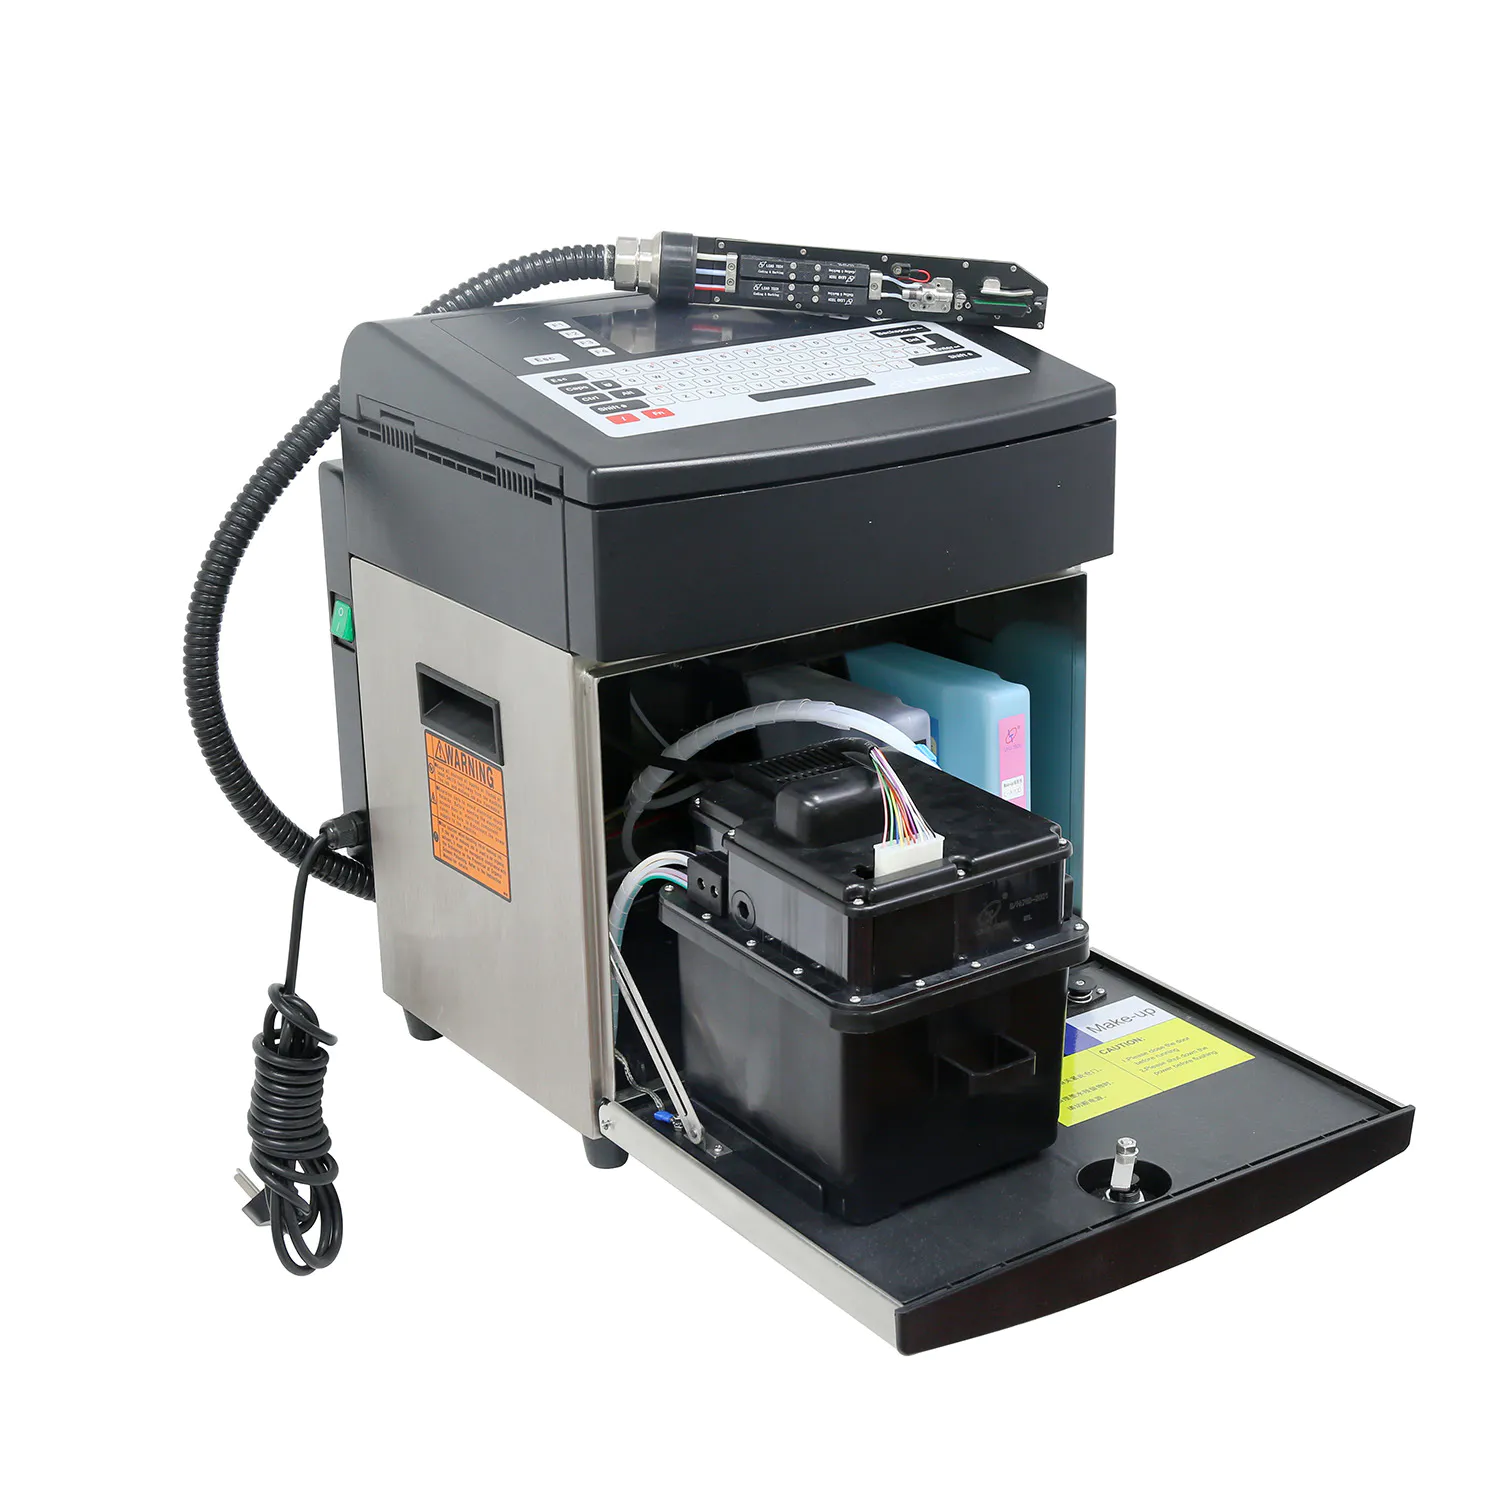 Lead Tech Lt760 Code Printing Machine Inkjet Printer